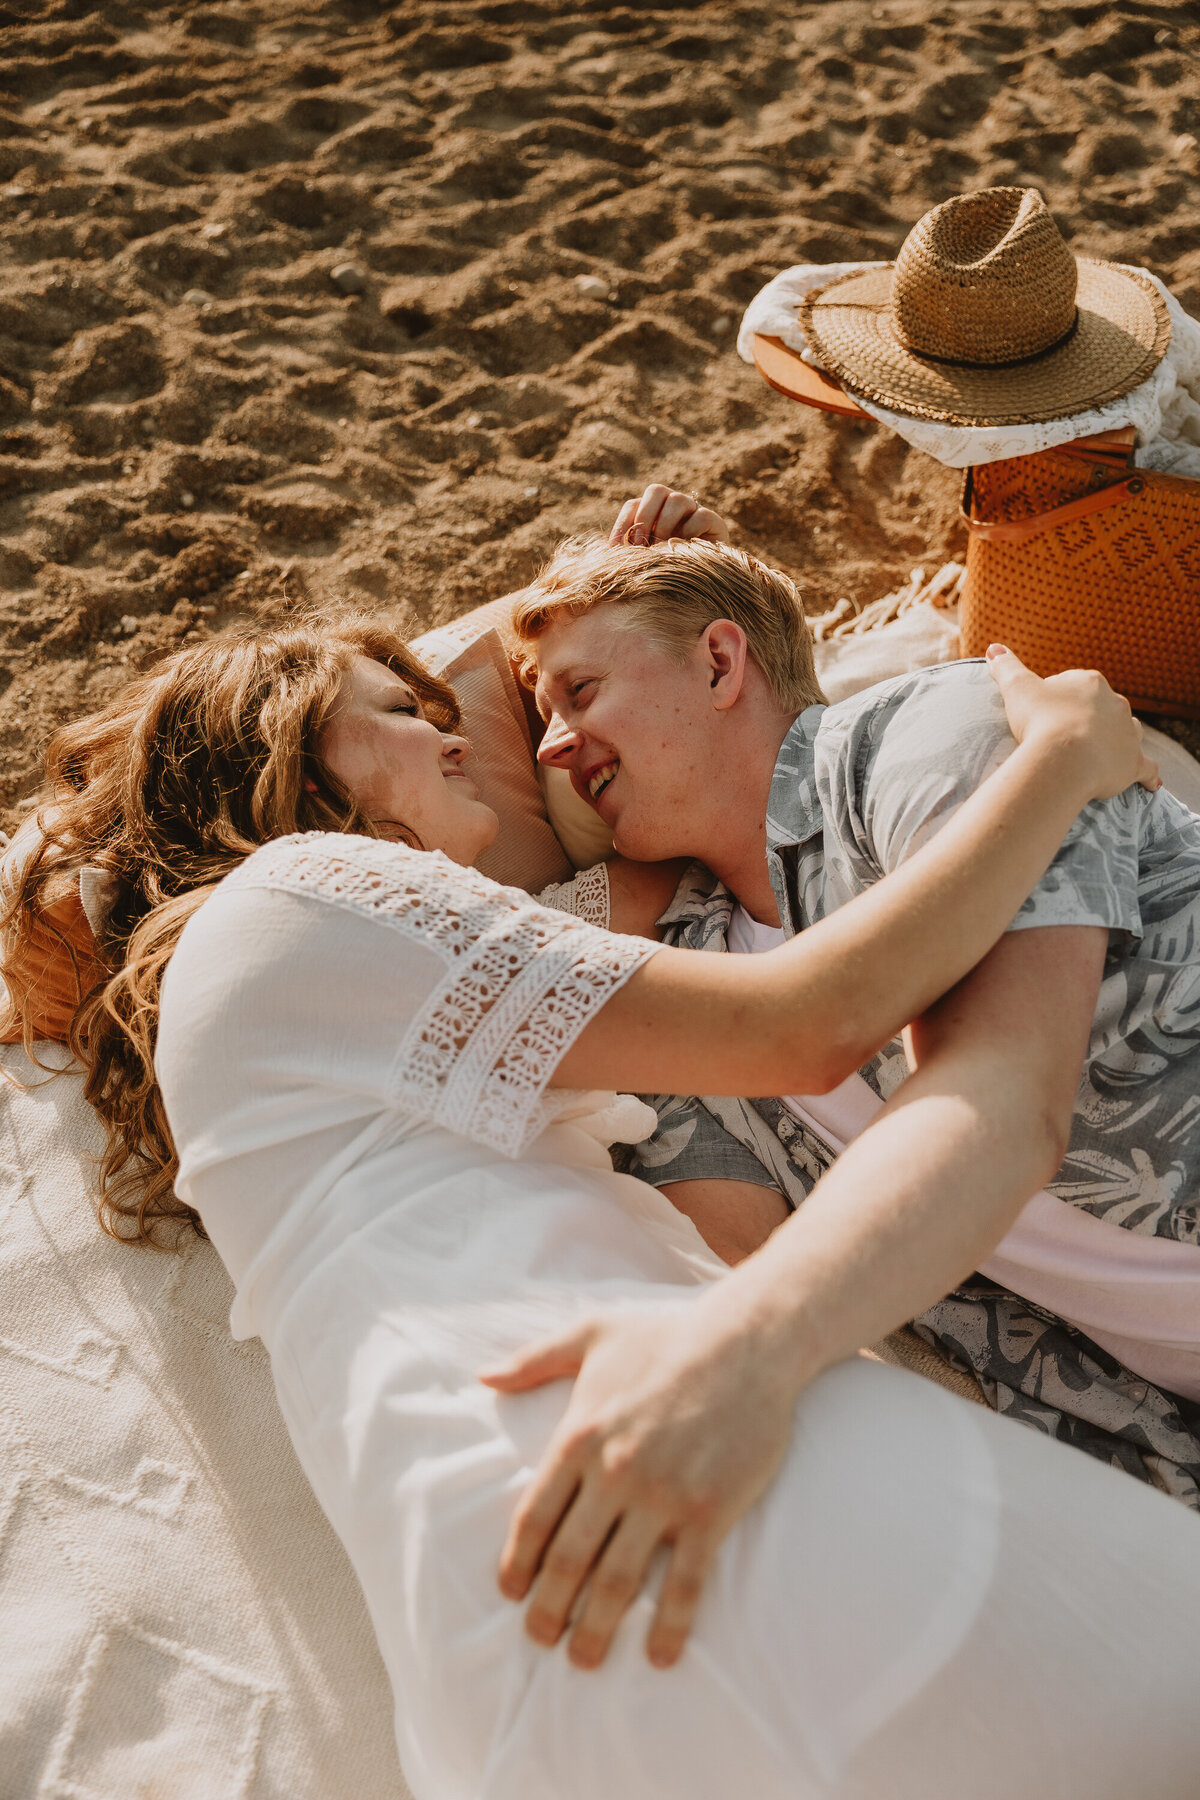 romantic-couple-beach-picnic-9